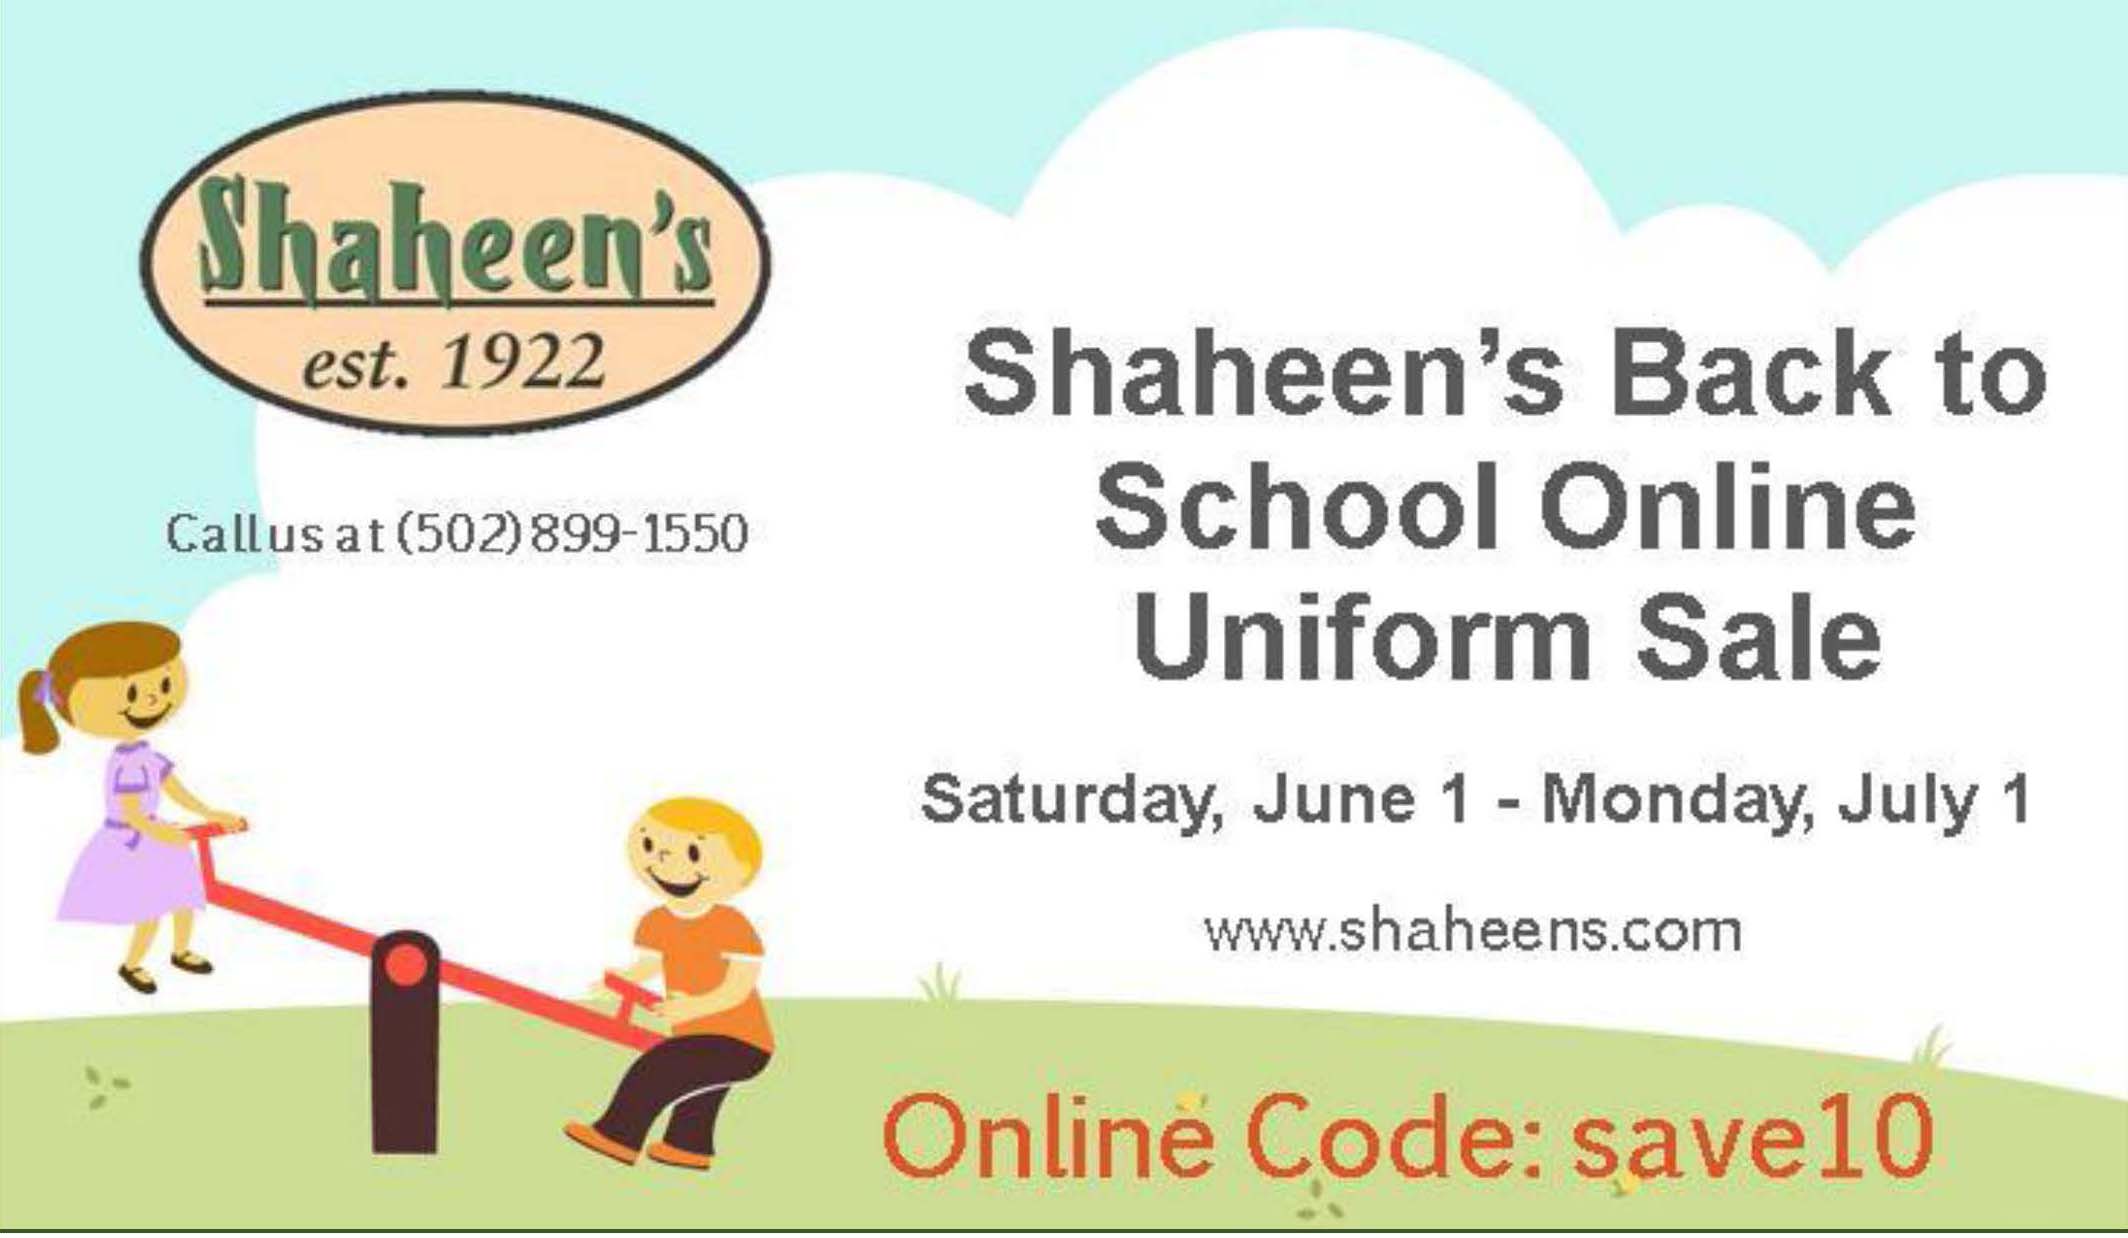 Christian Academy School System | Shaheen's Back-to-School Online Uniform Sale | June-July 2019